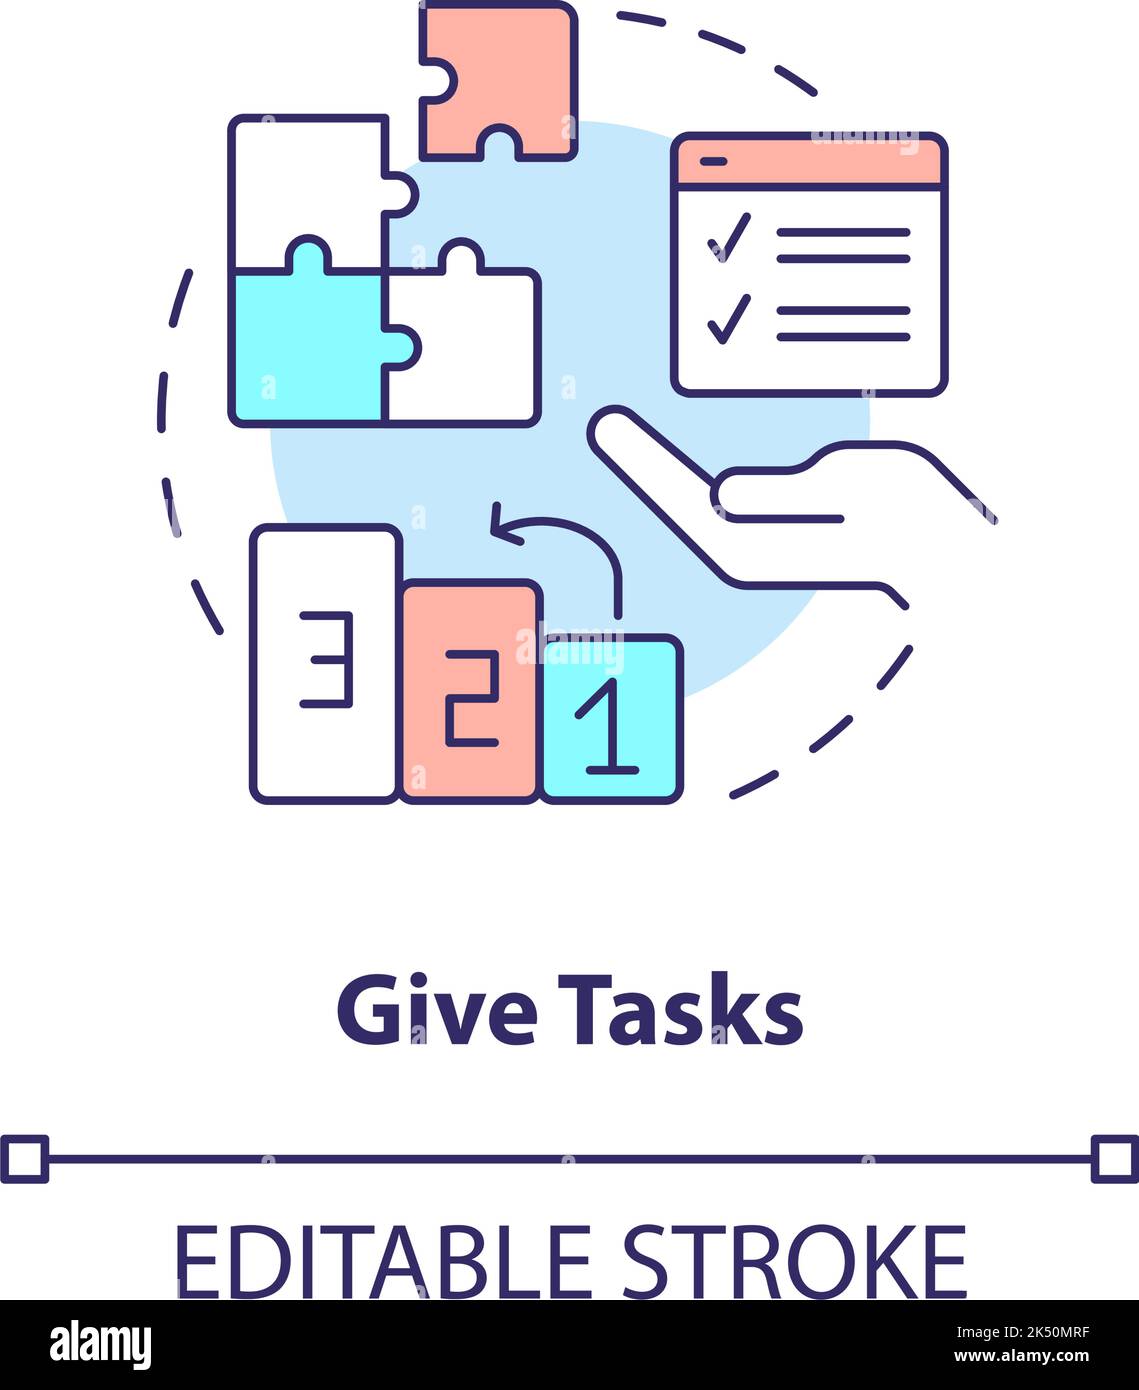 Give tasks concept icon Stock Vector